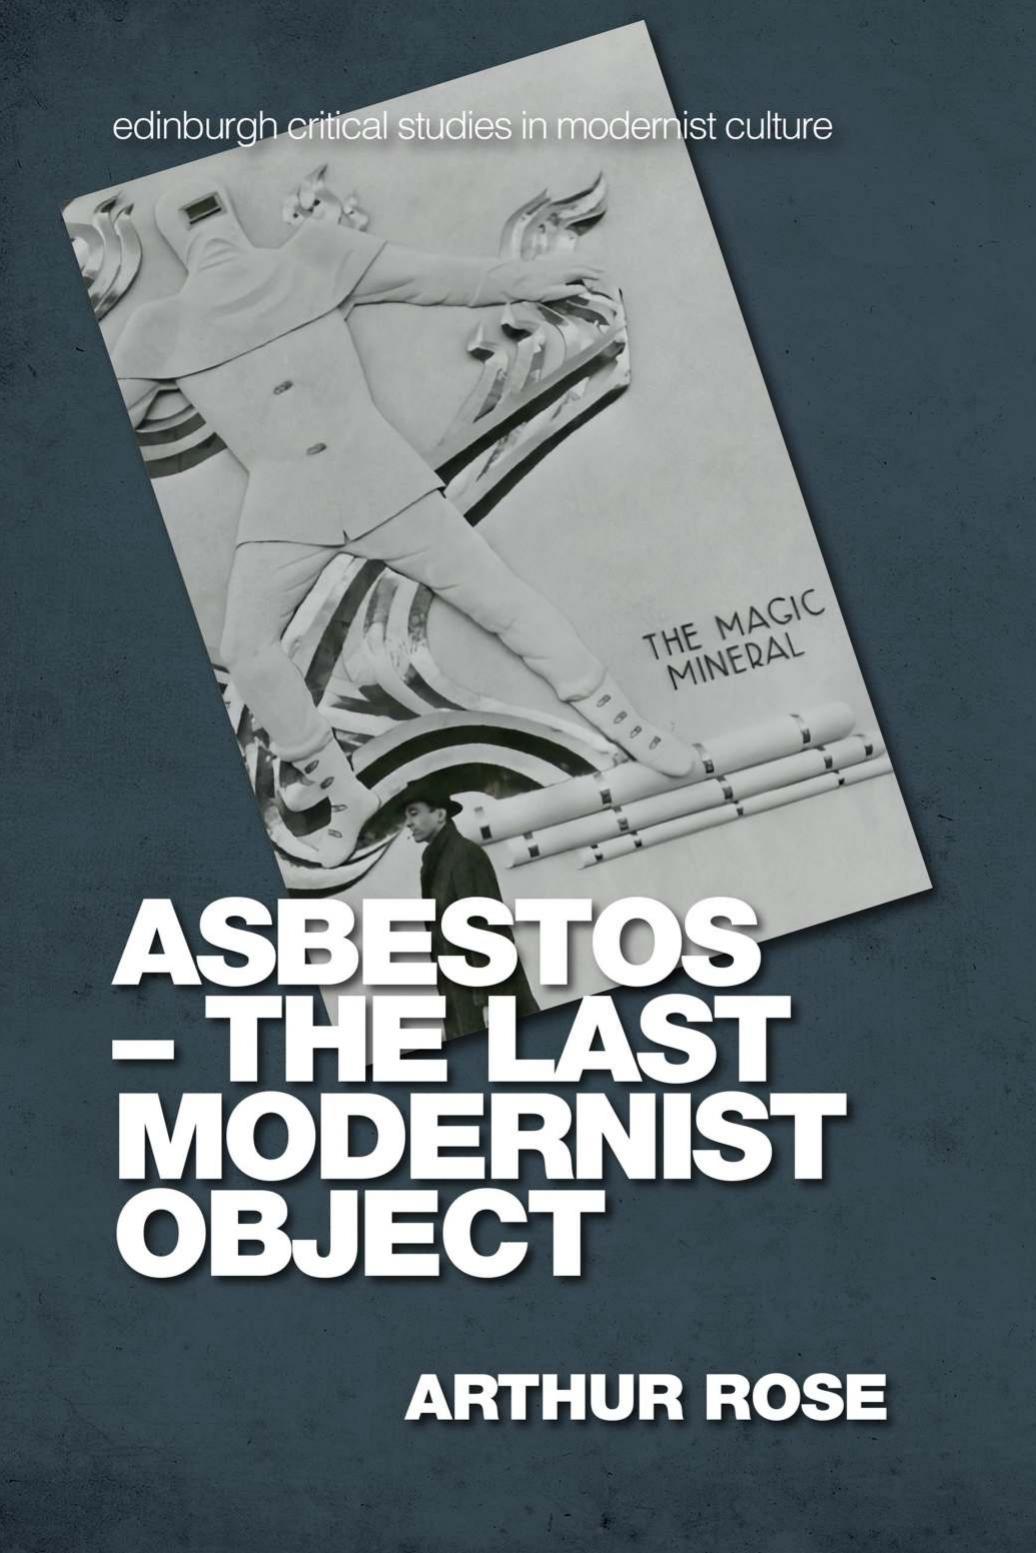 Asbestos â The Last Modernist Object by Arthur Rose